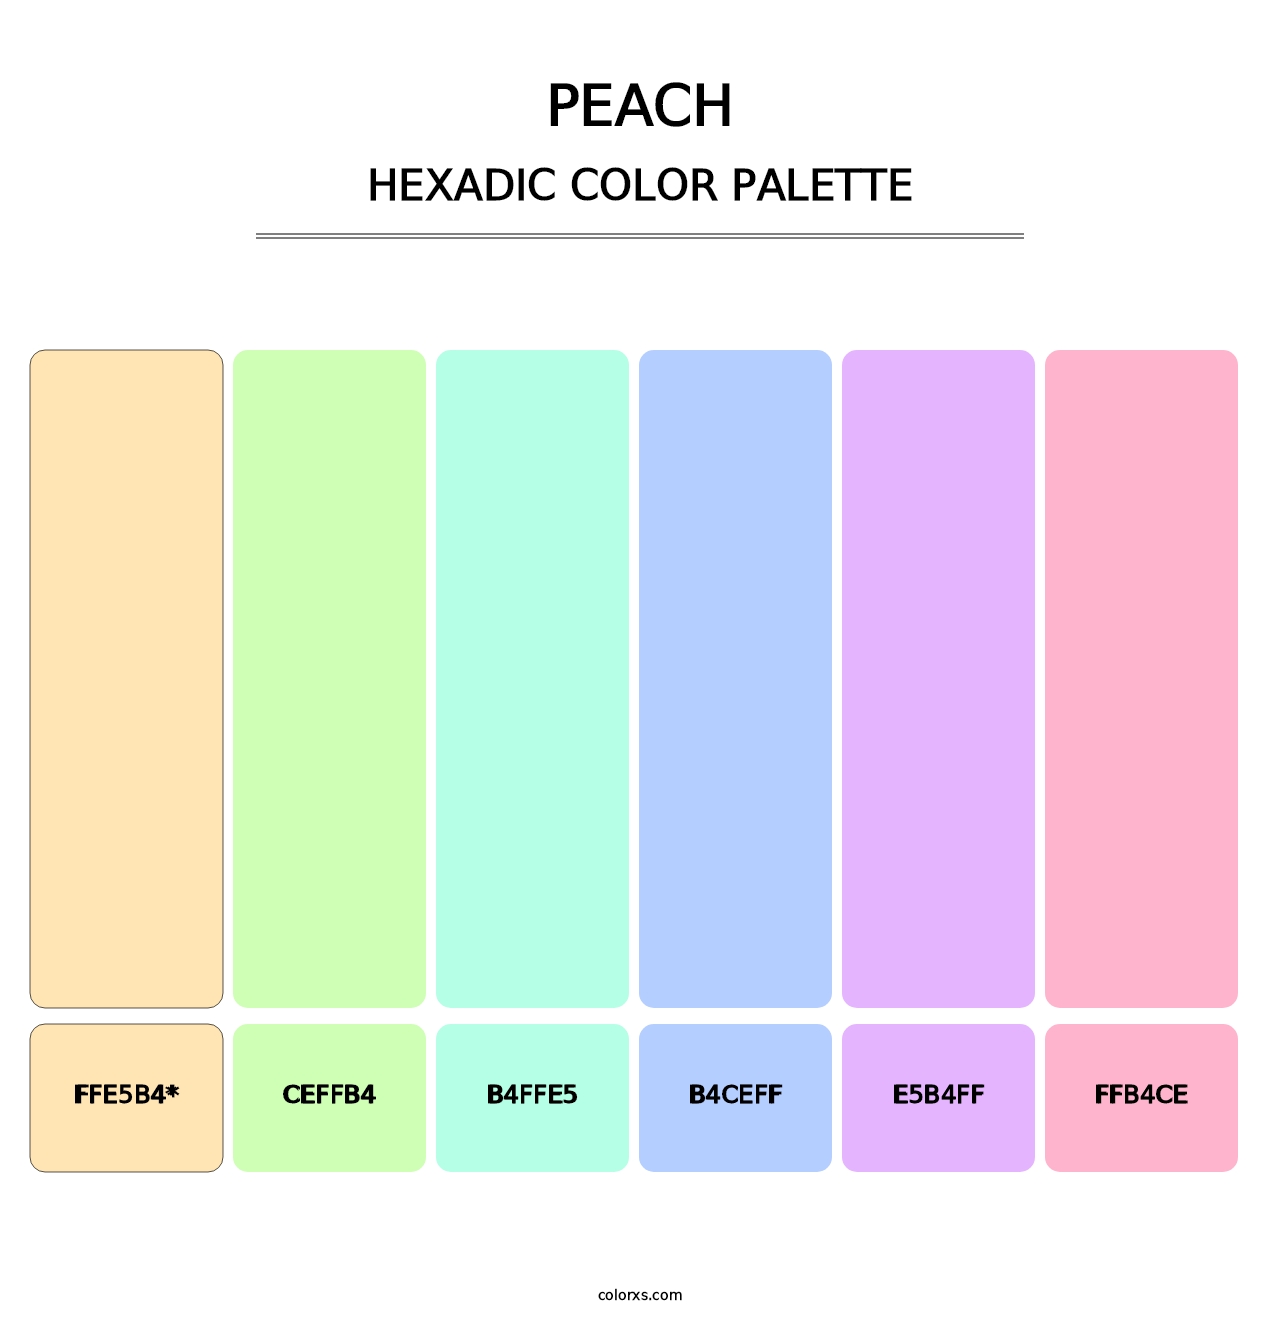 Peach - Hexadic Color Palette